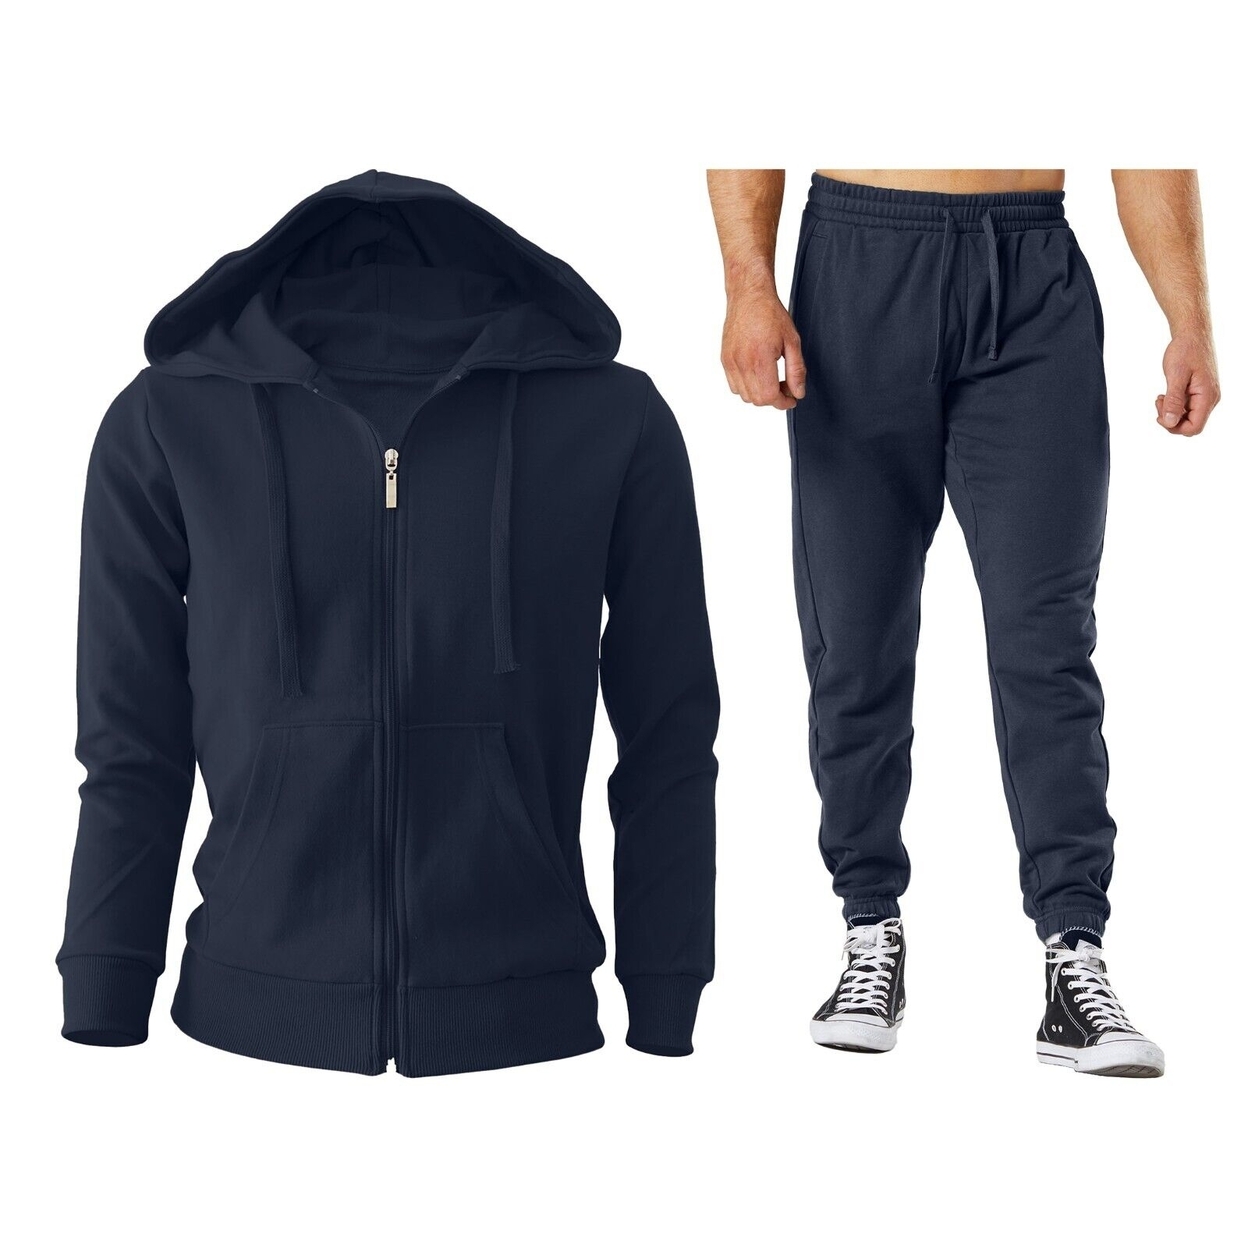 2-Piece: Men's Winter Warm Cozy Athletic Multi-Pockets BIG & TALL Sweatsuit Set - Navy, Small